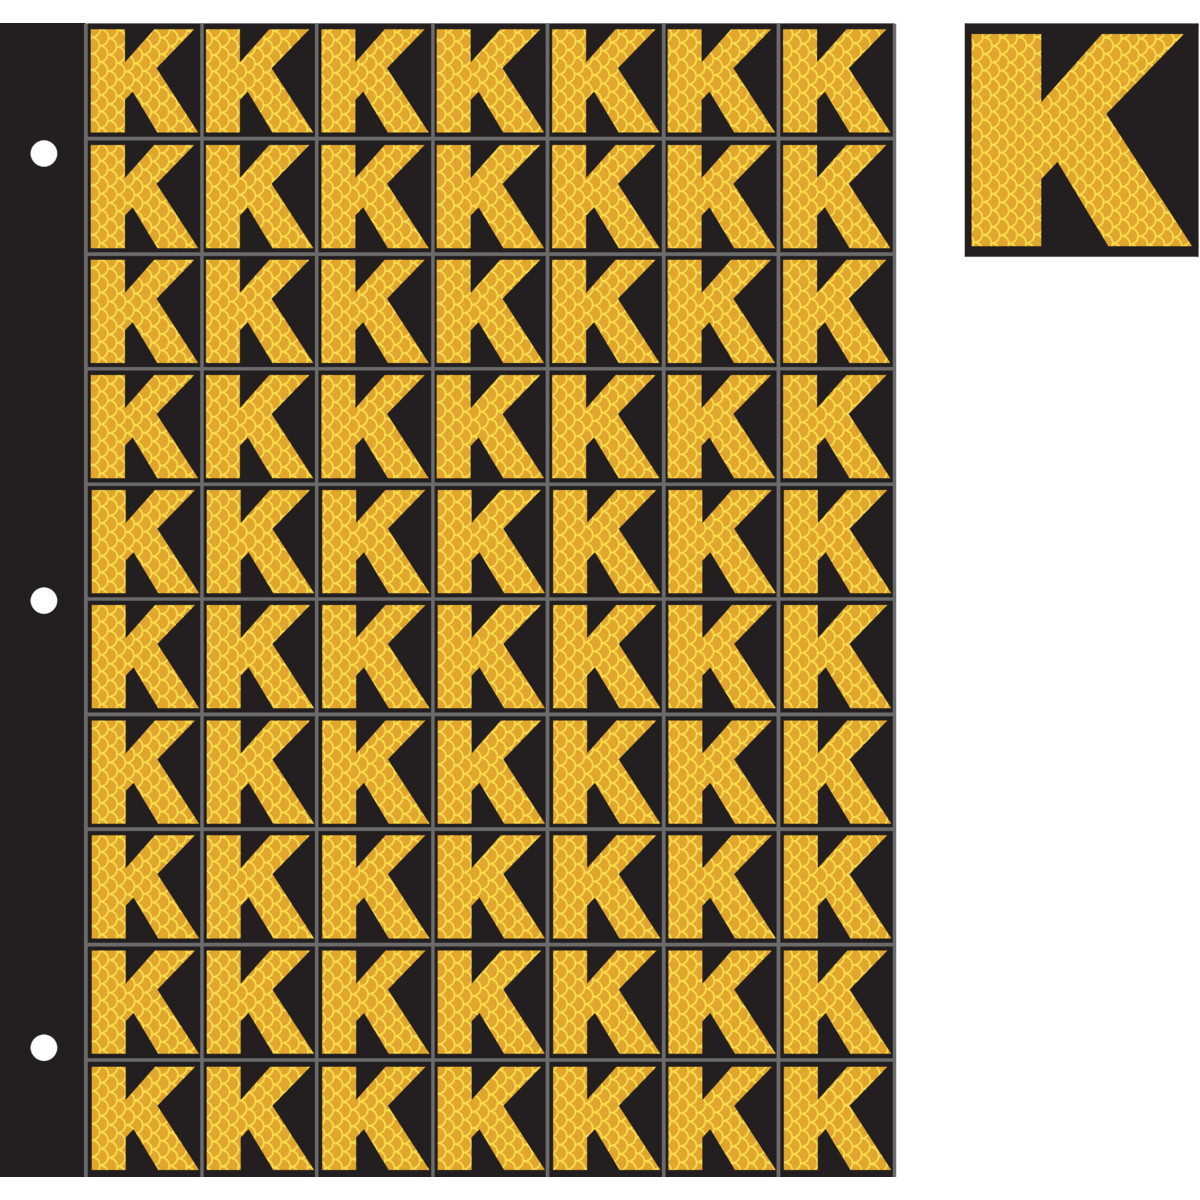 1" Yellow on Black High Intensity Reflective "K"